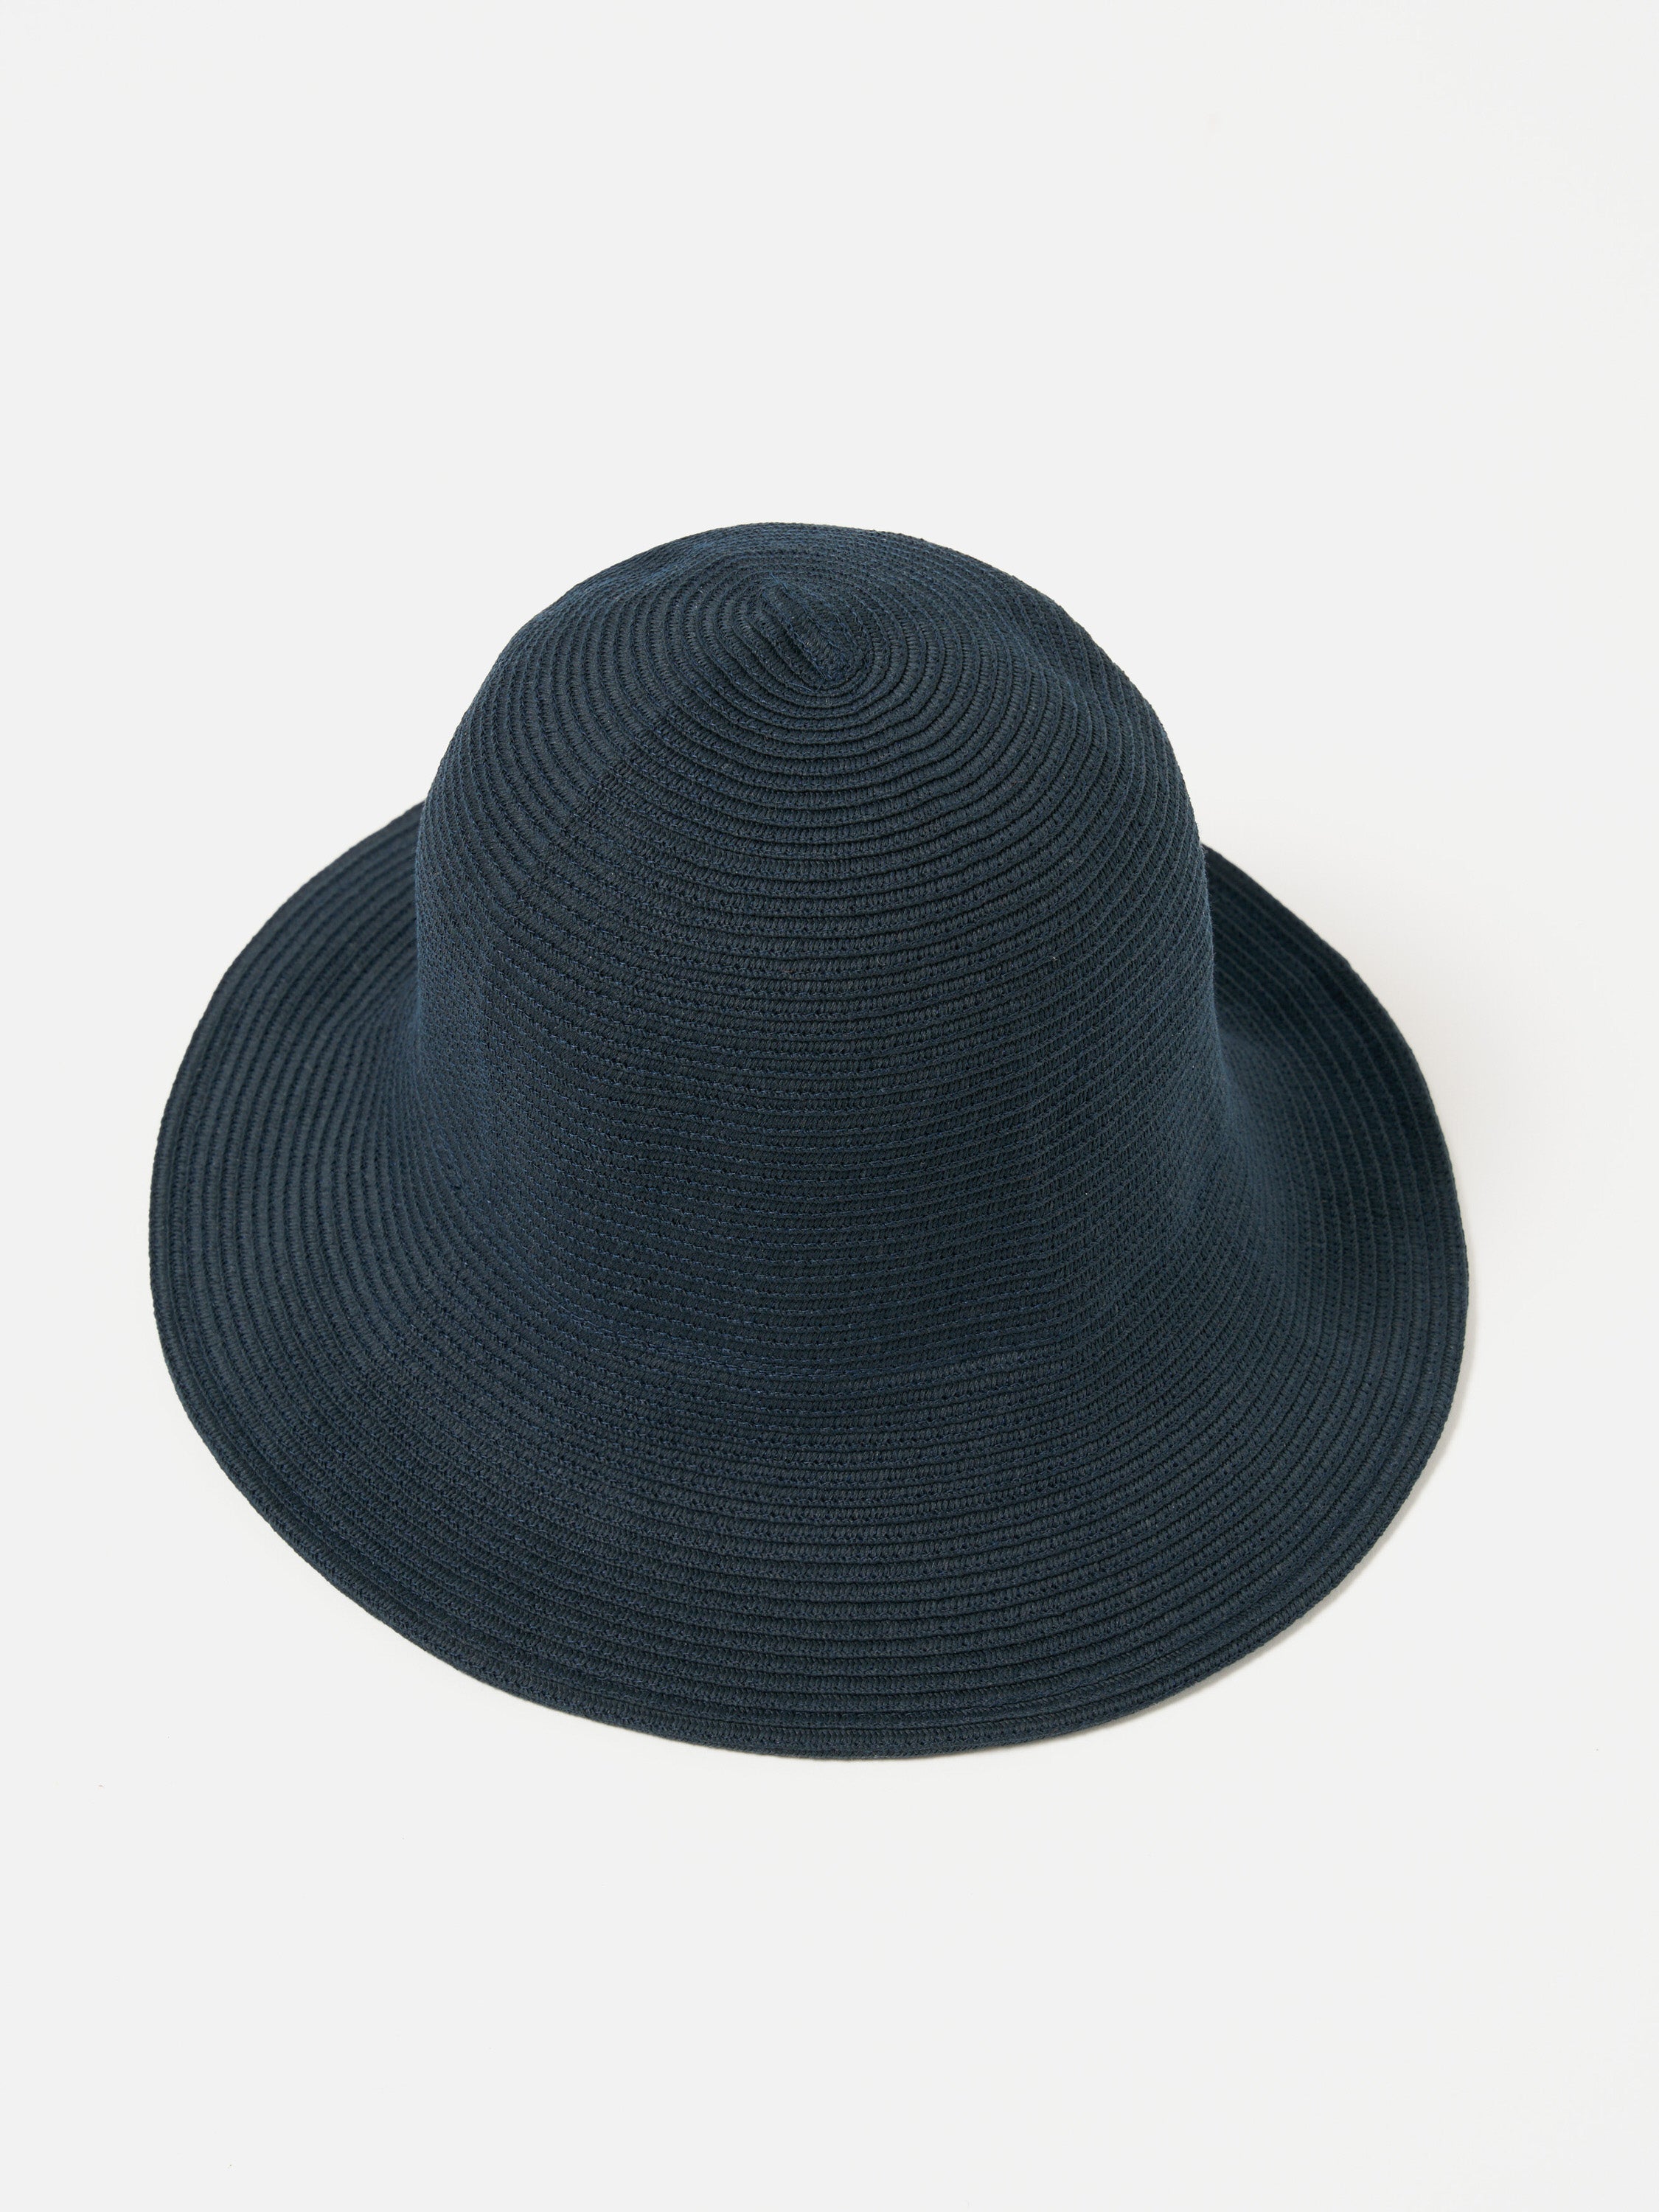 cableami® Cotton Braid Tulip Hat in Navy/Indigo Boro Cotton